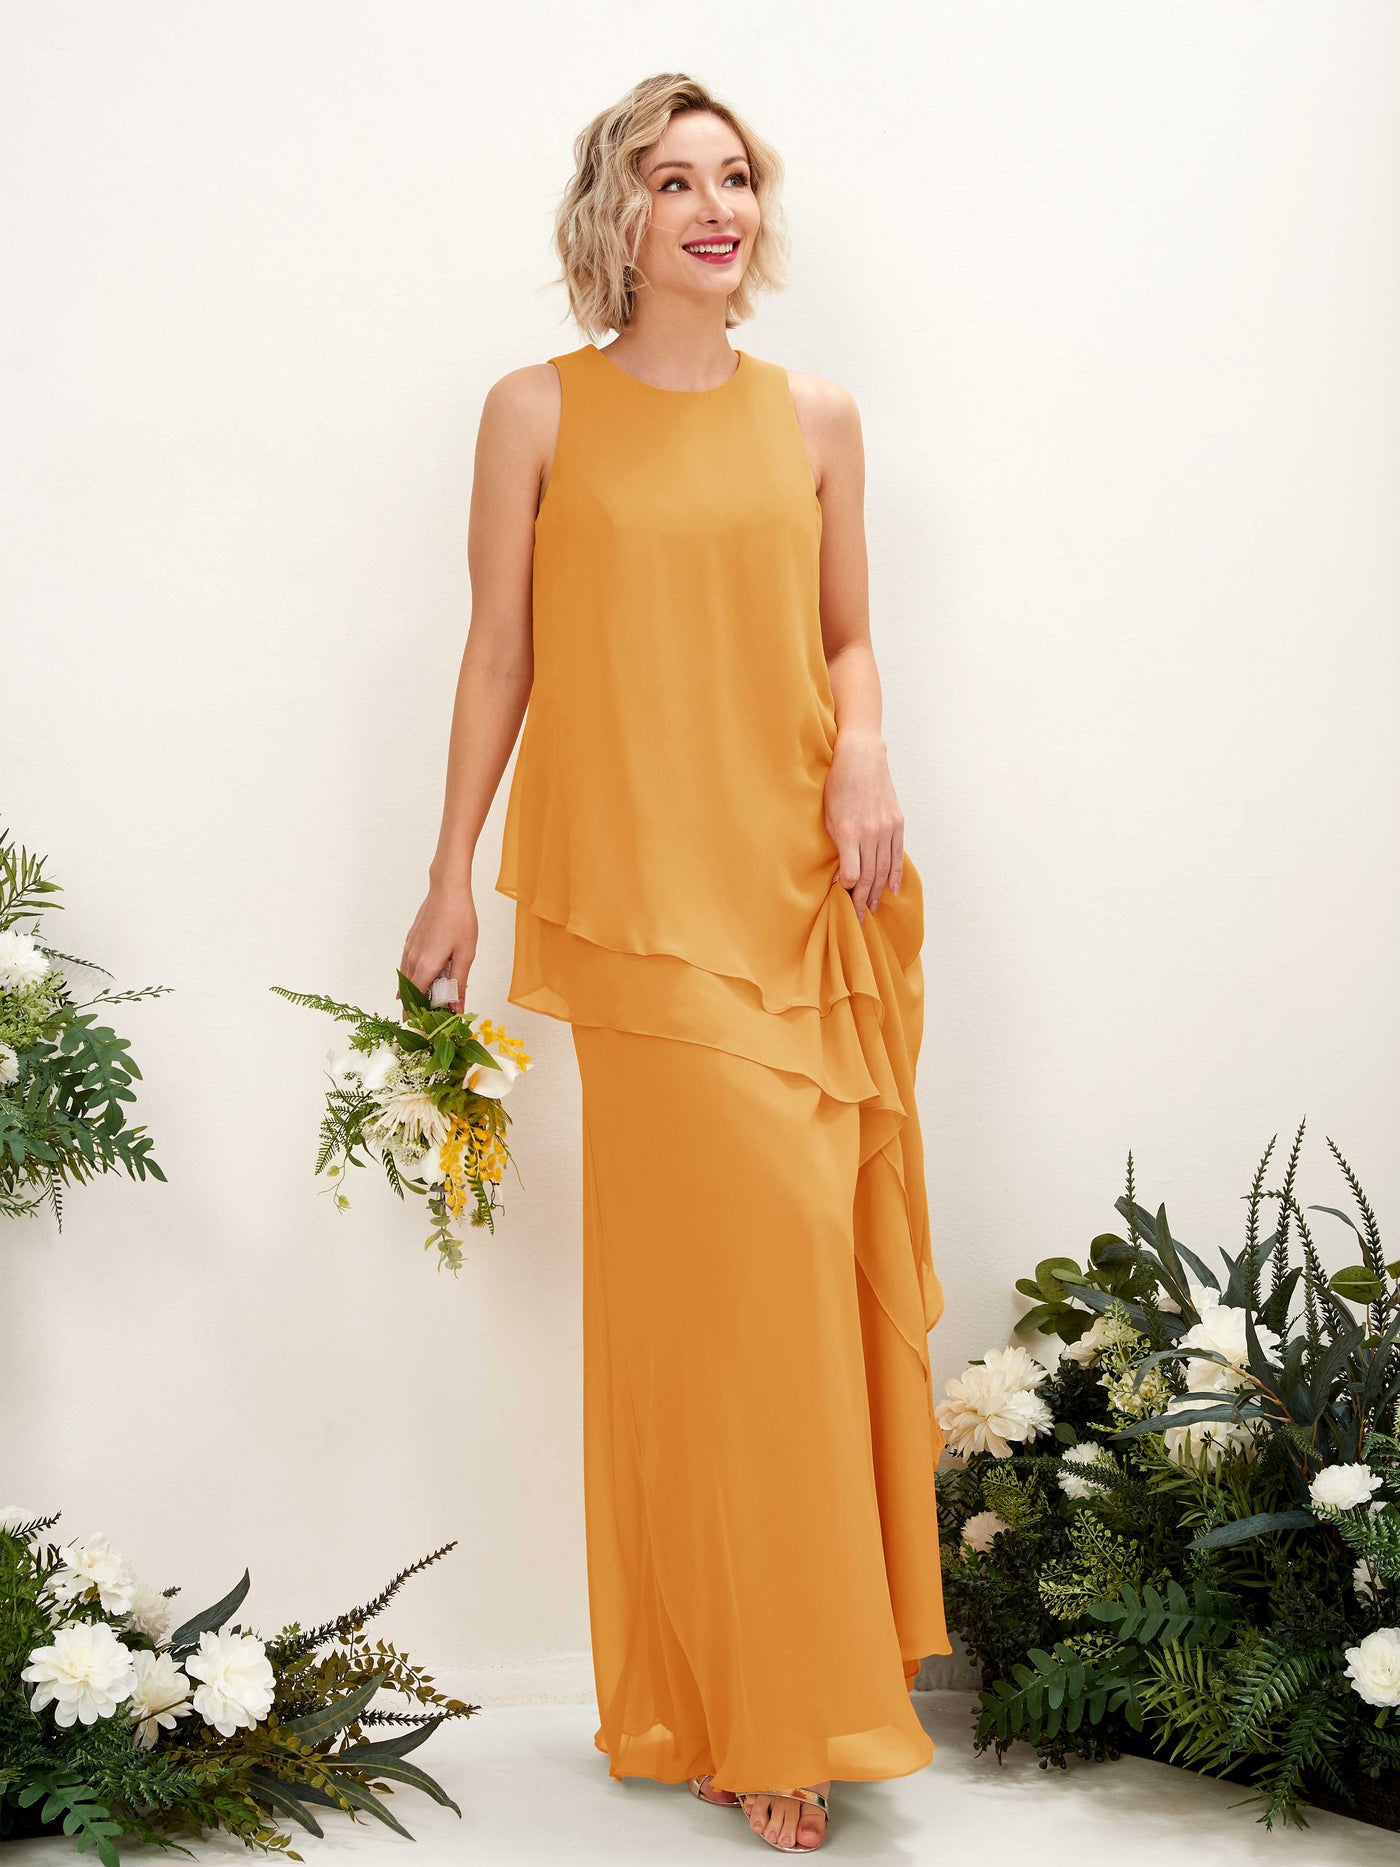 Round Sleeveless Chiffon Bridesmaid Dress - Mango (81222302)#color_mango